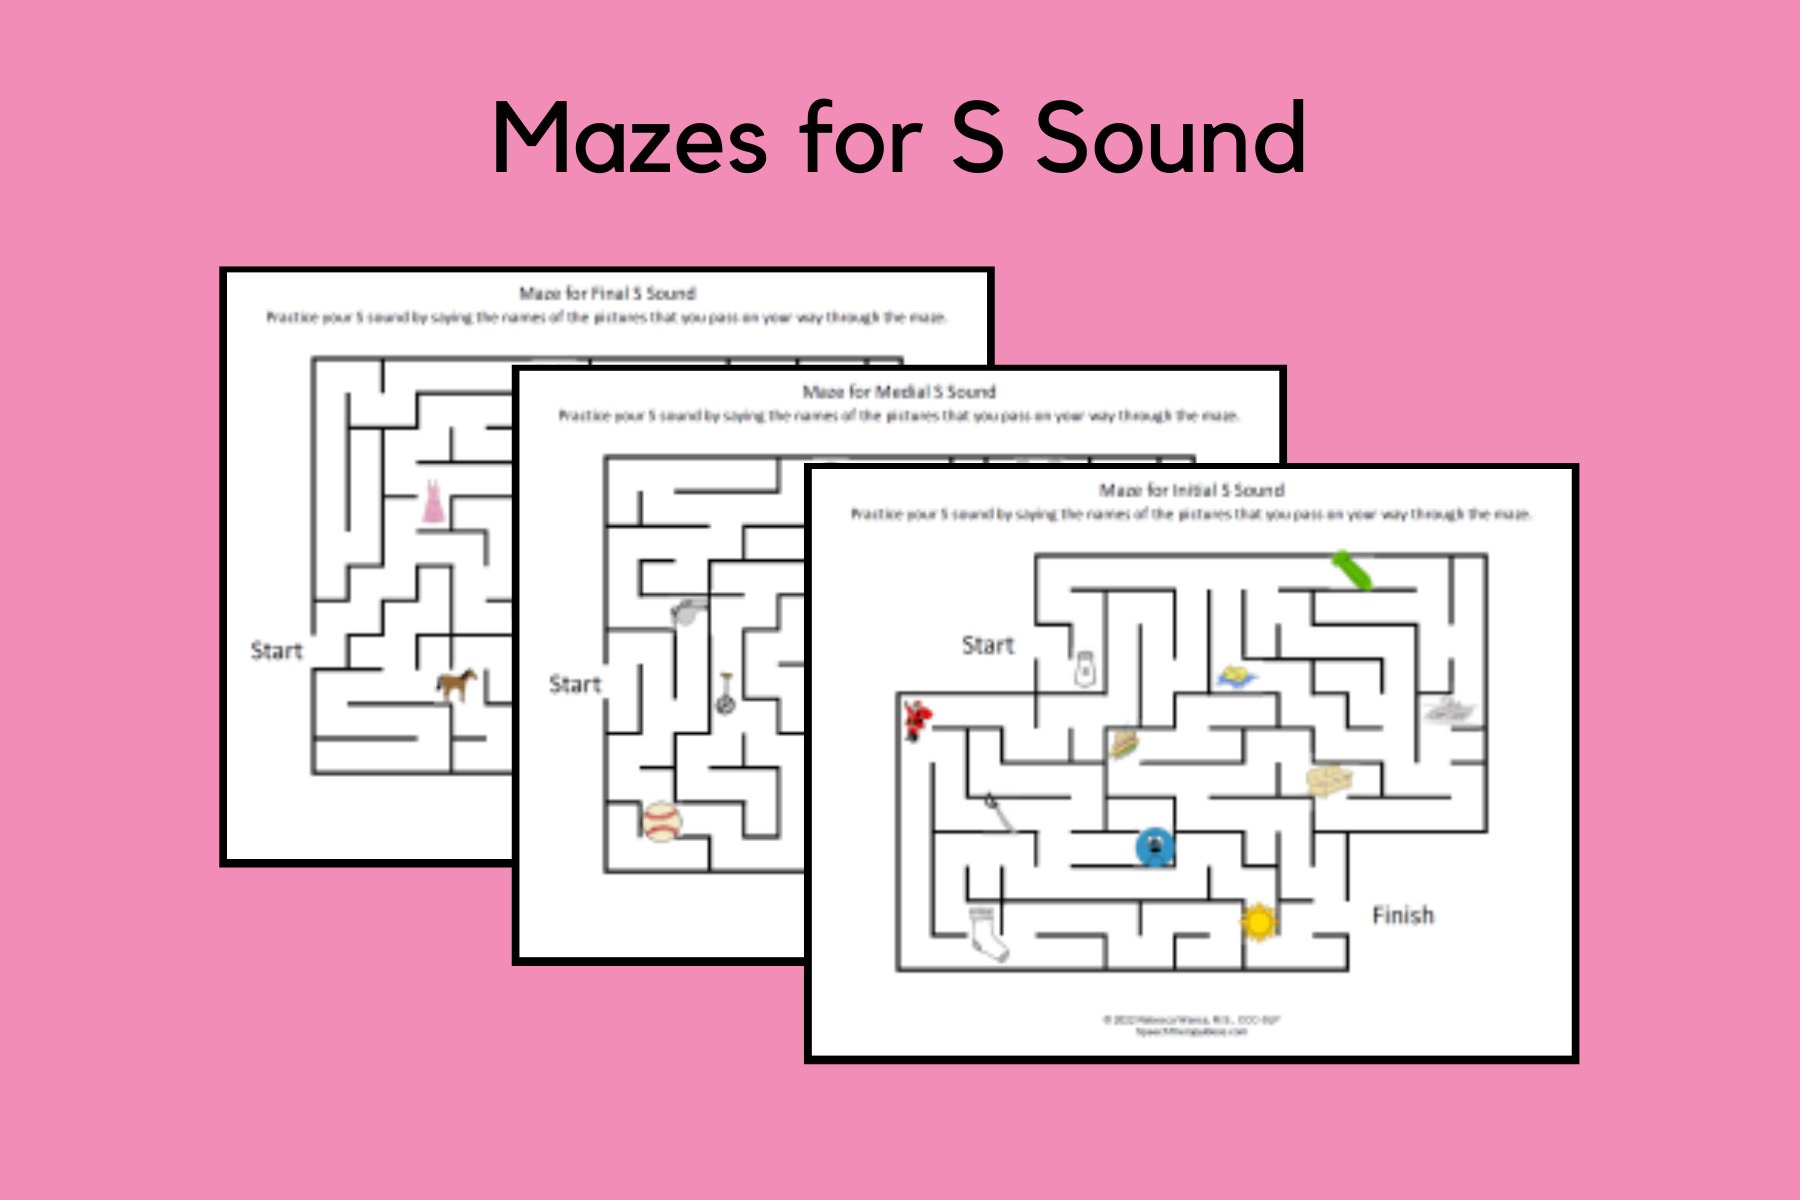 Mazes for S Sound